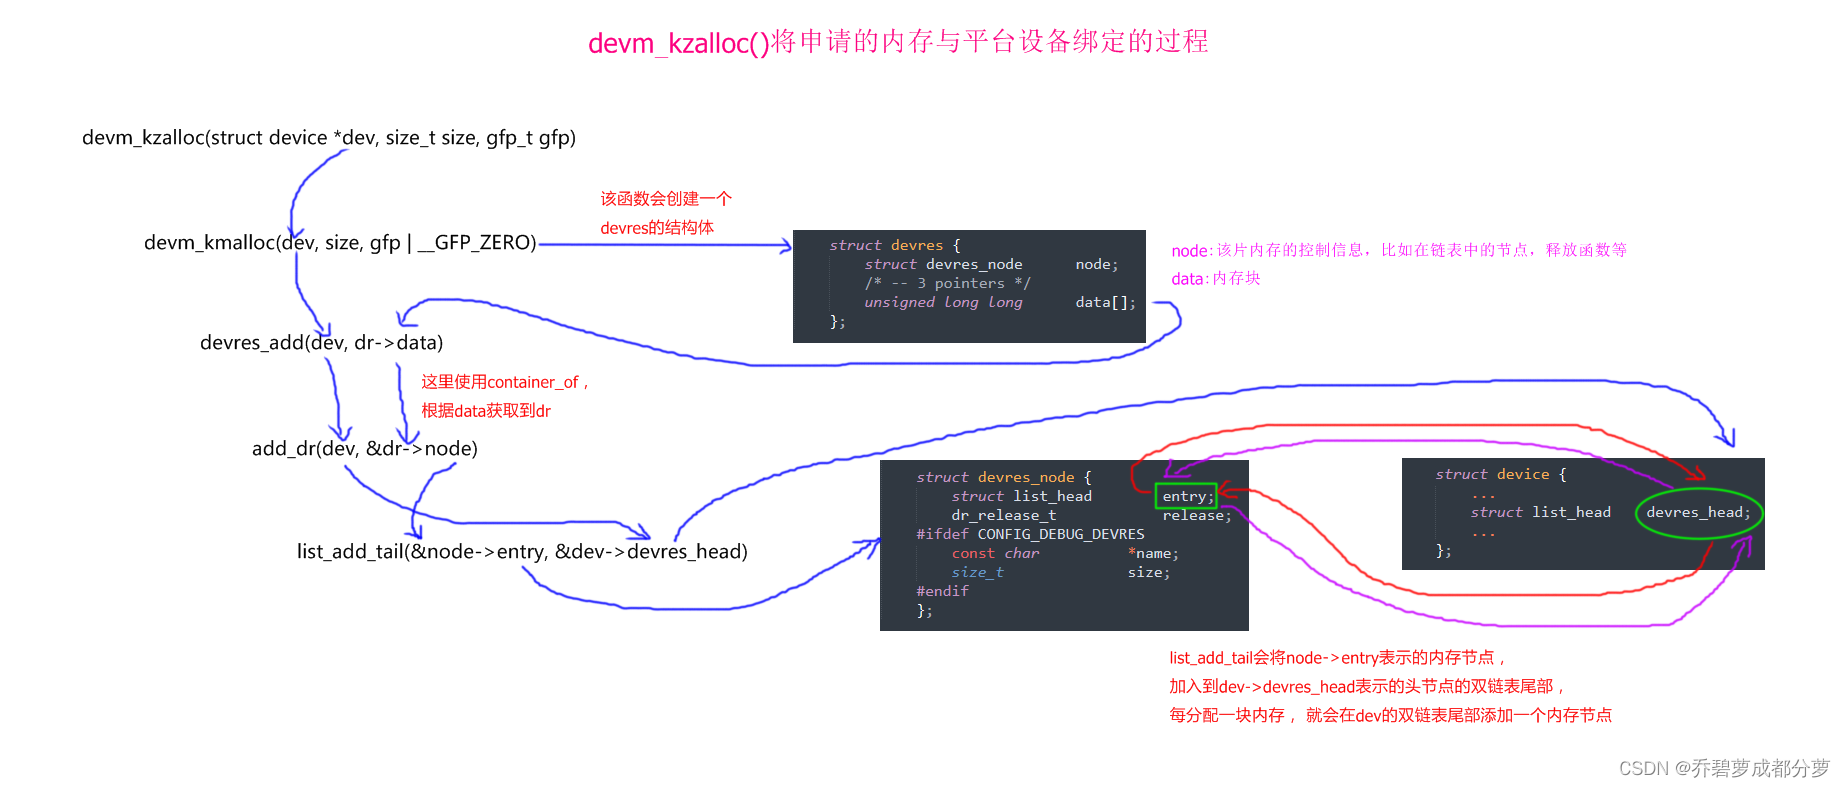 demv_kzalloc绑定内存与平台设备